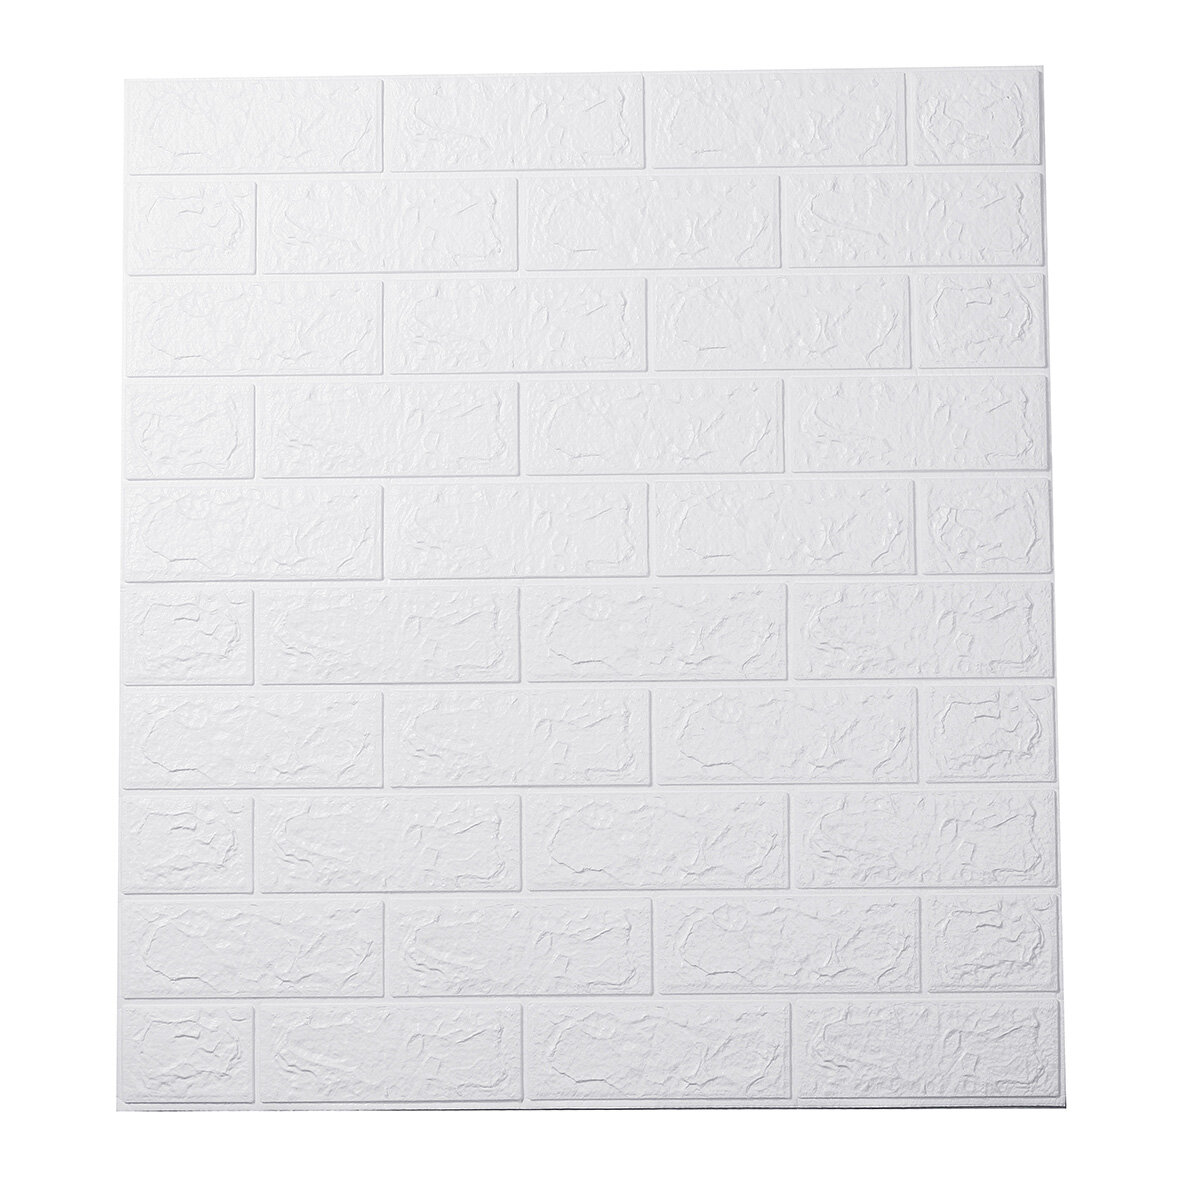 

3D Wall Sticker Self-Adhesive Wall Panels Waterproof PE Foam White Wallpaper